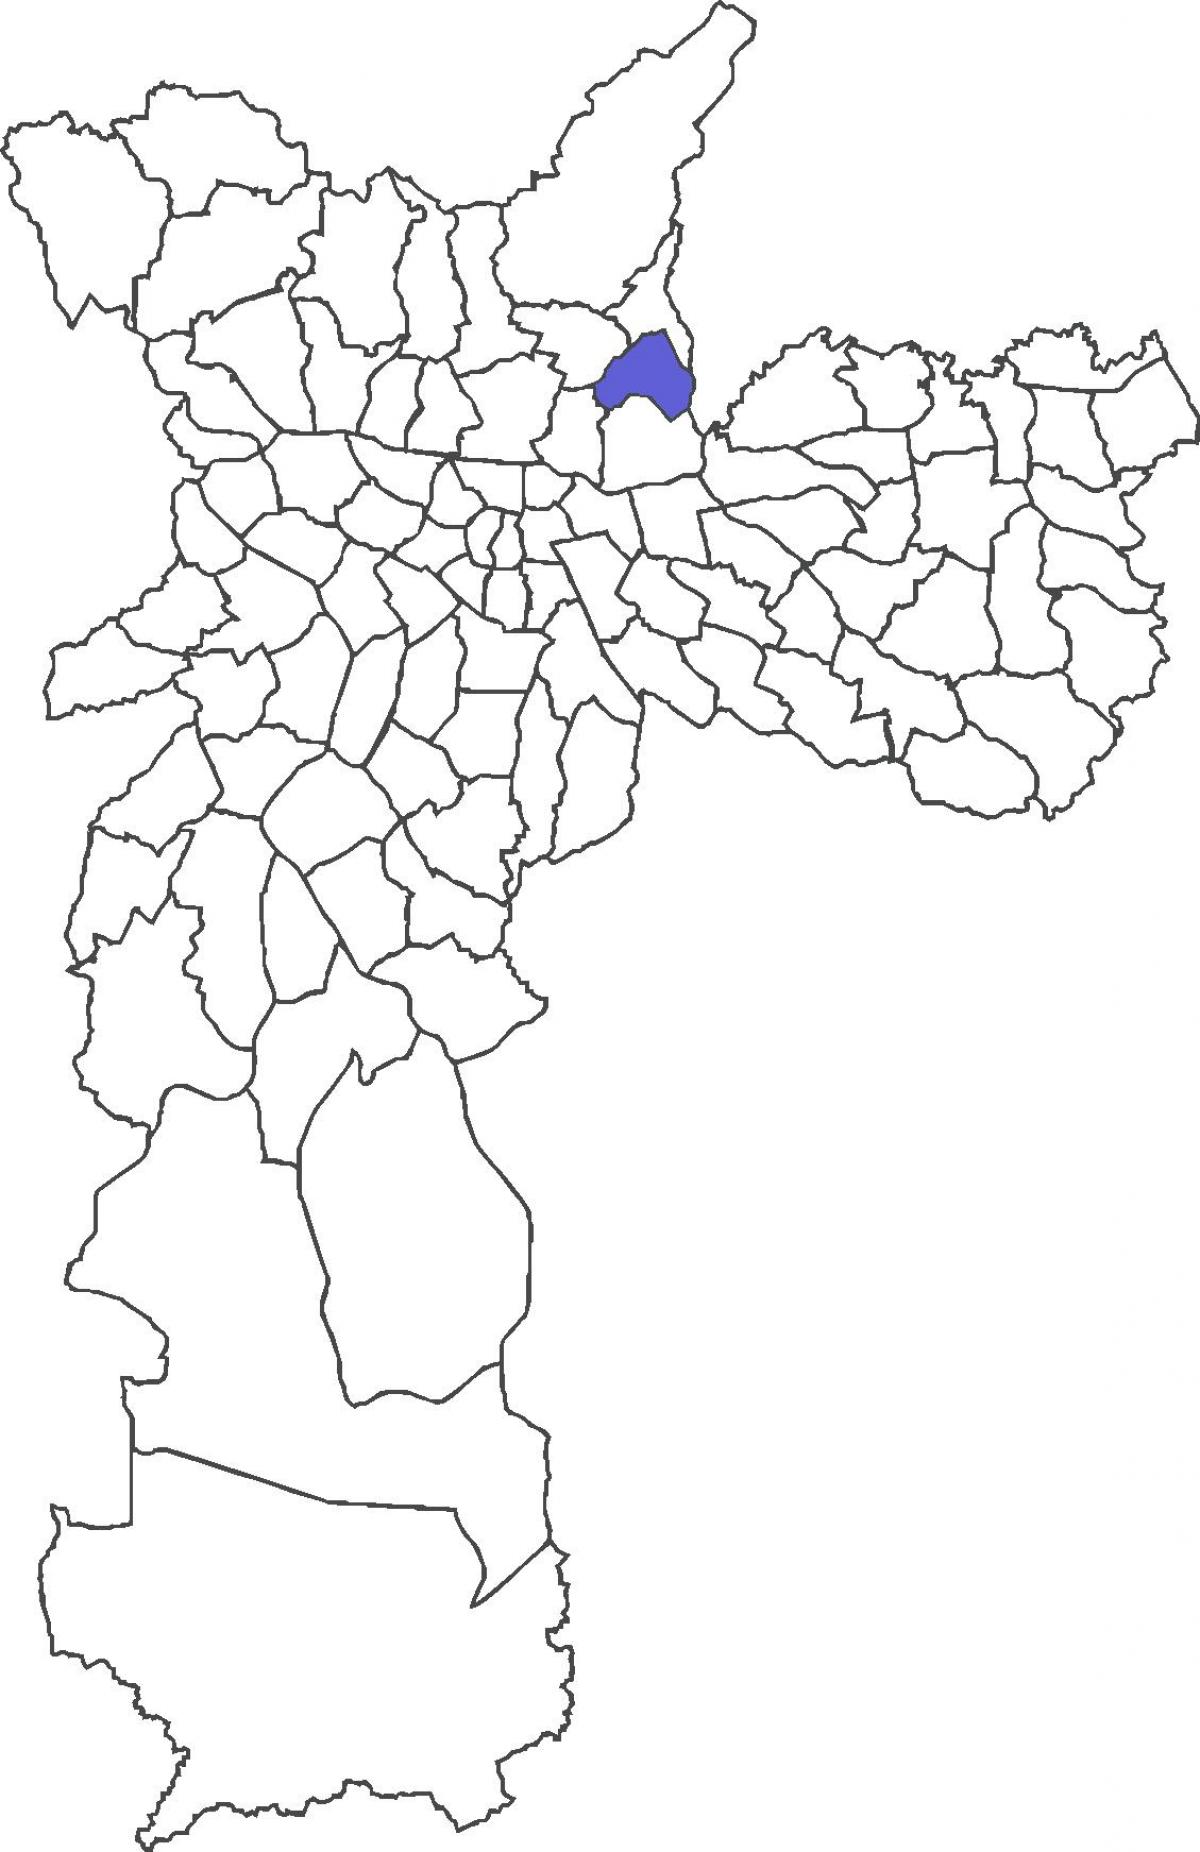 Карта раён Віла Медейрос